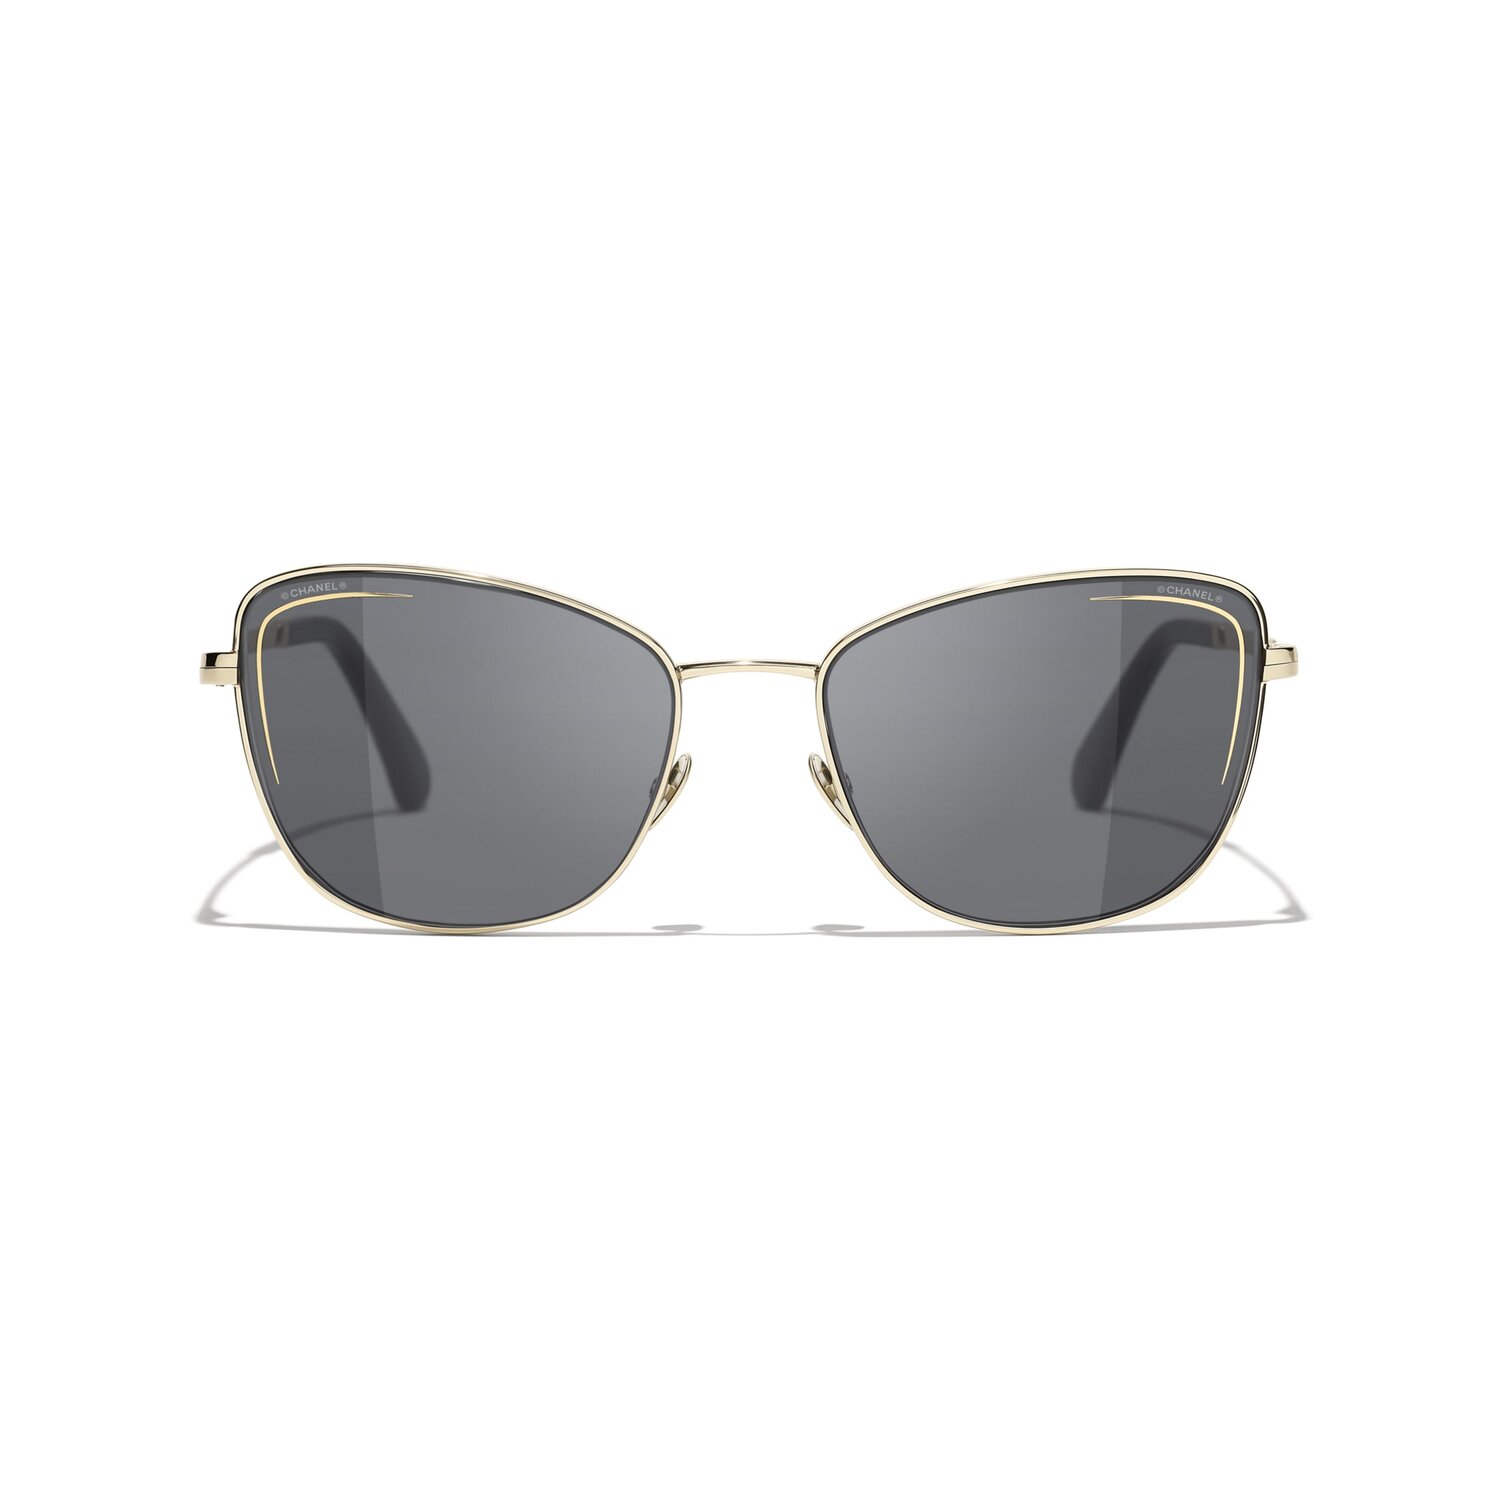 Cult Object: Chanel Visor Sunglasses